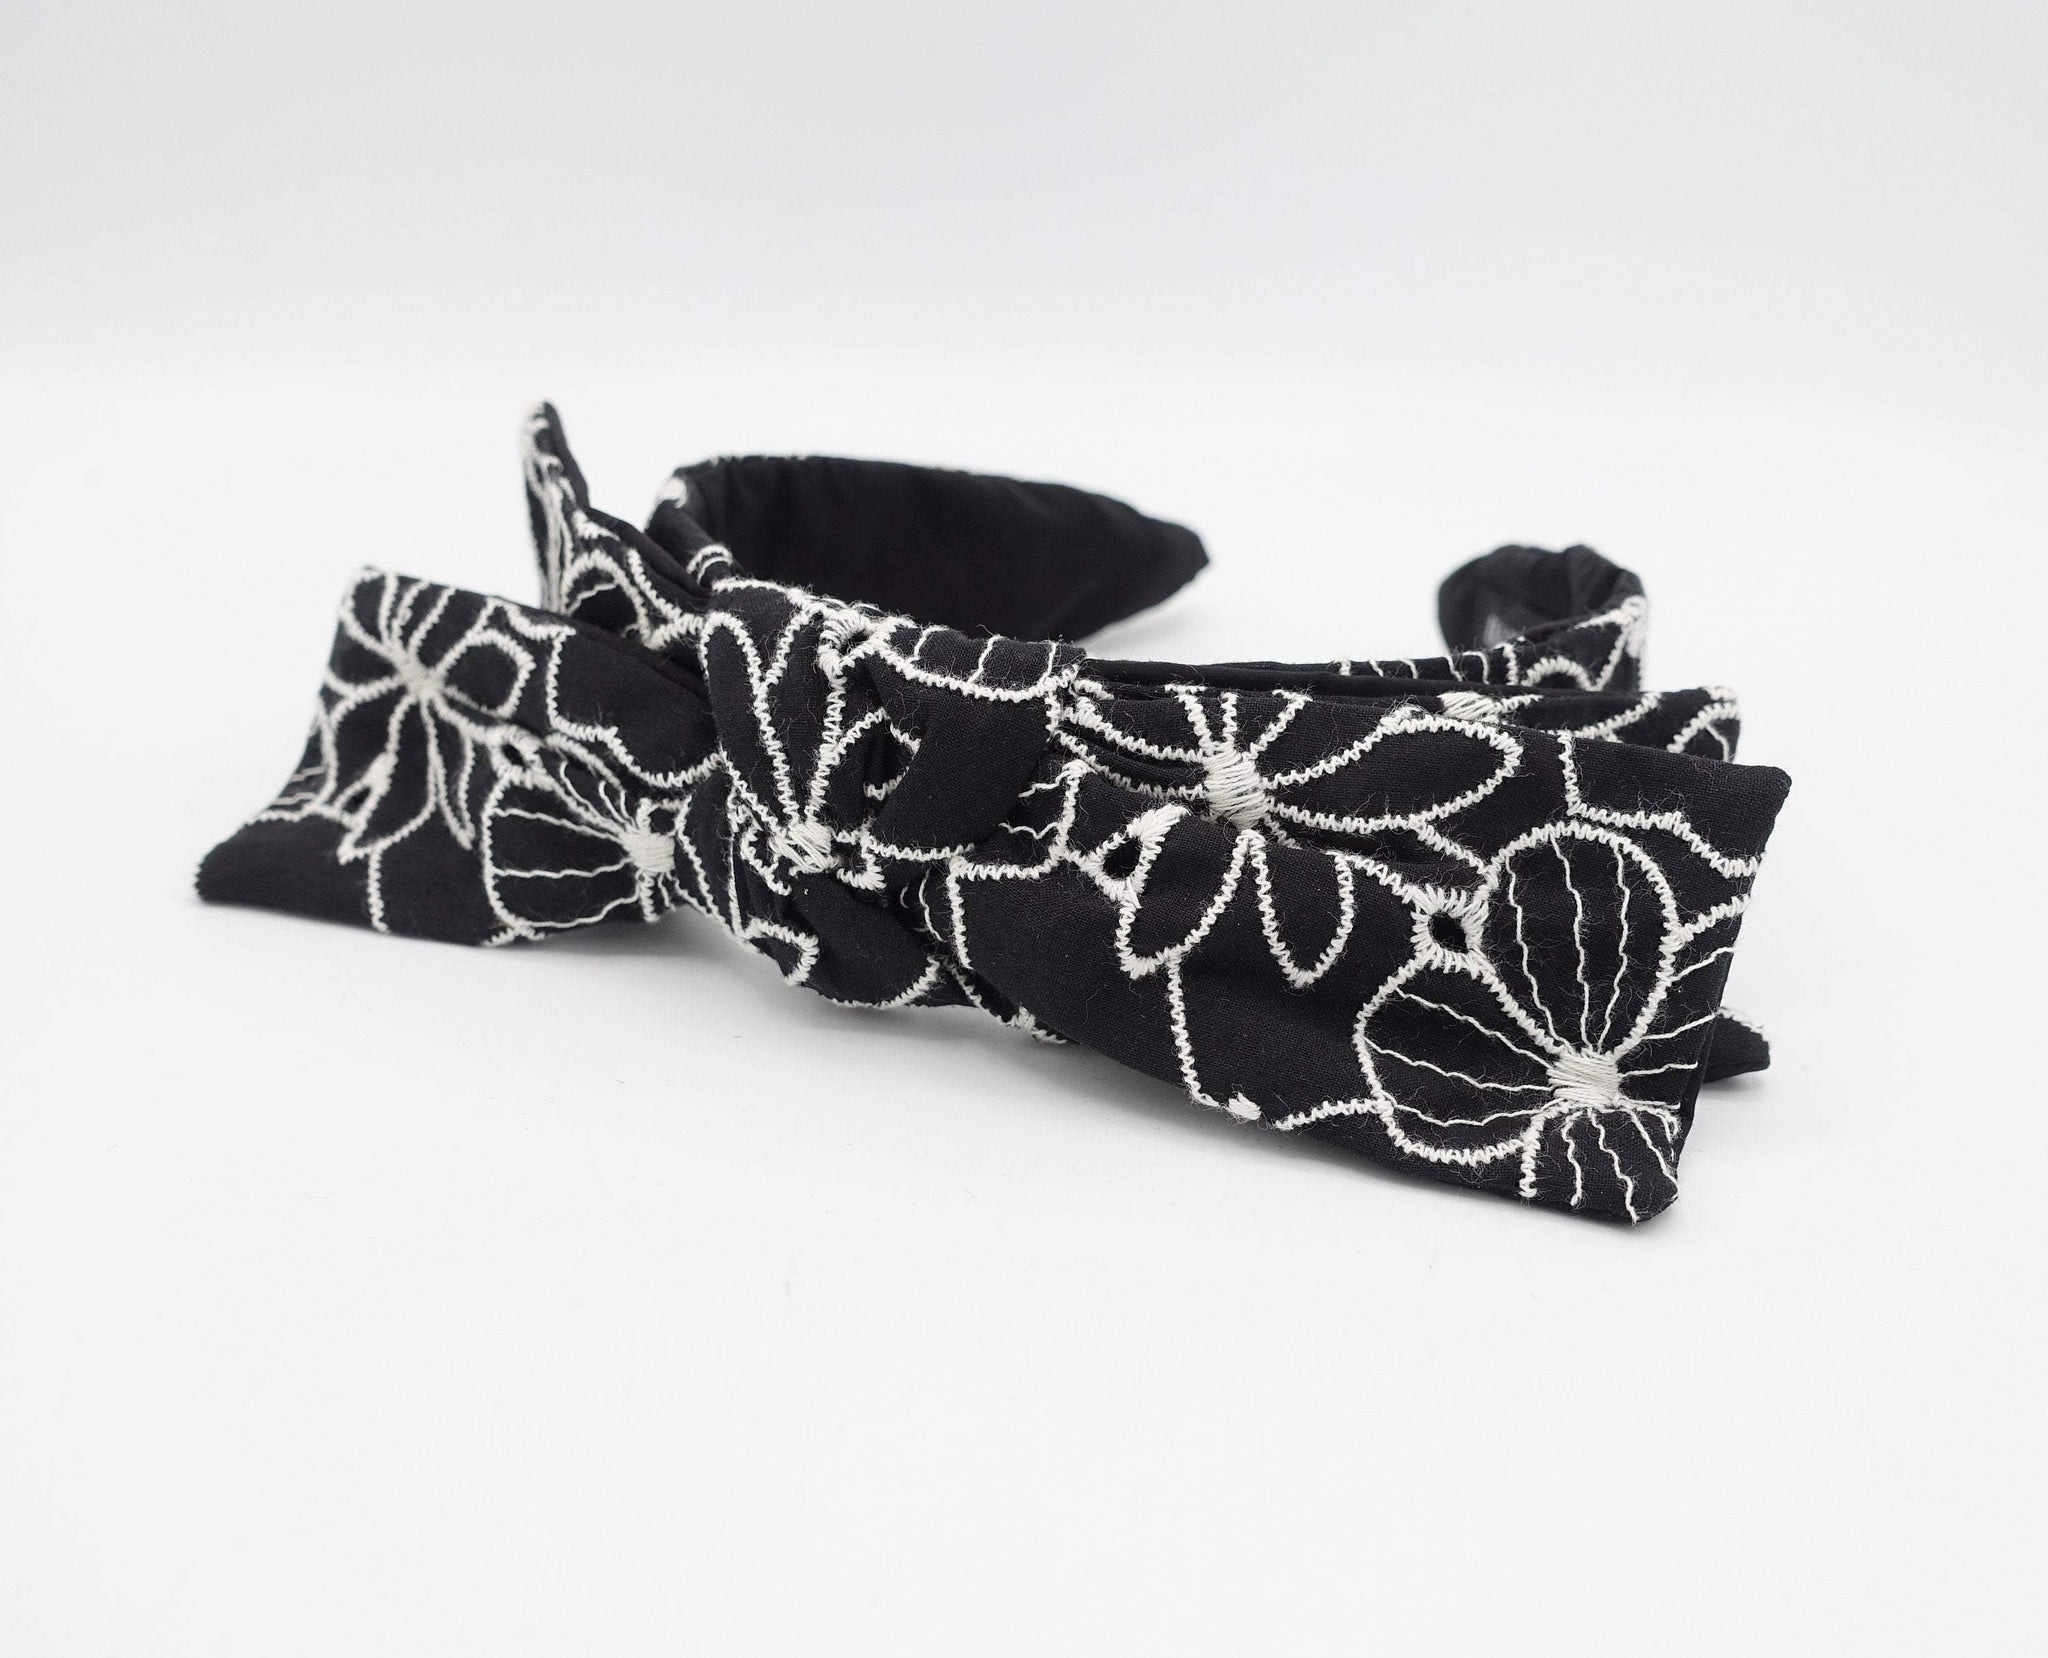 VeryShine Headband flower embroidered headband wired bow knot headband